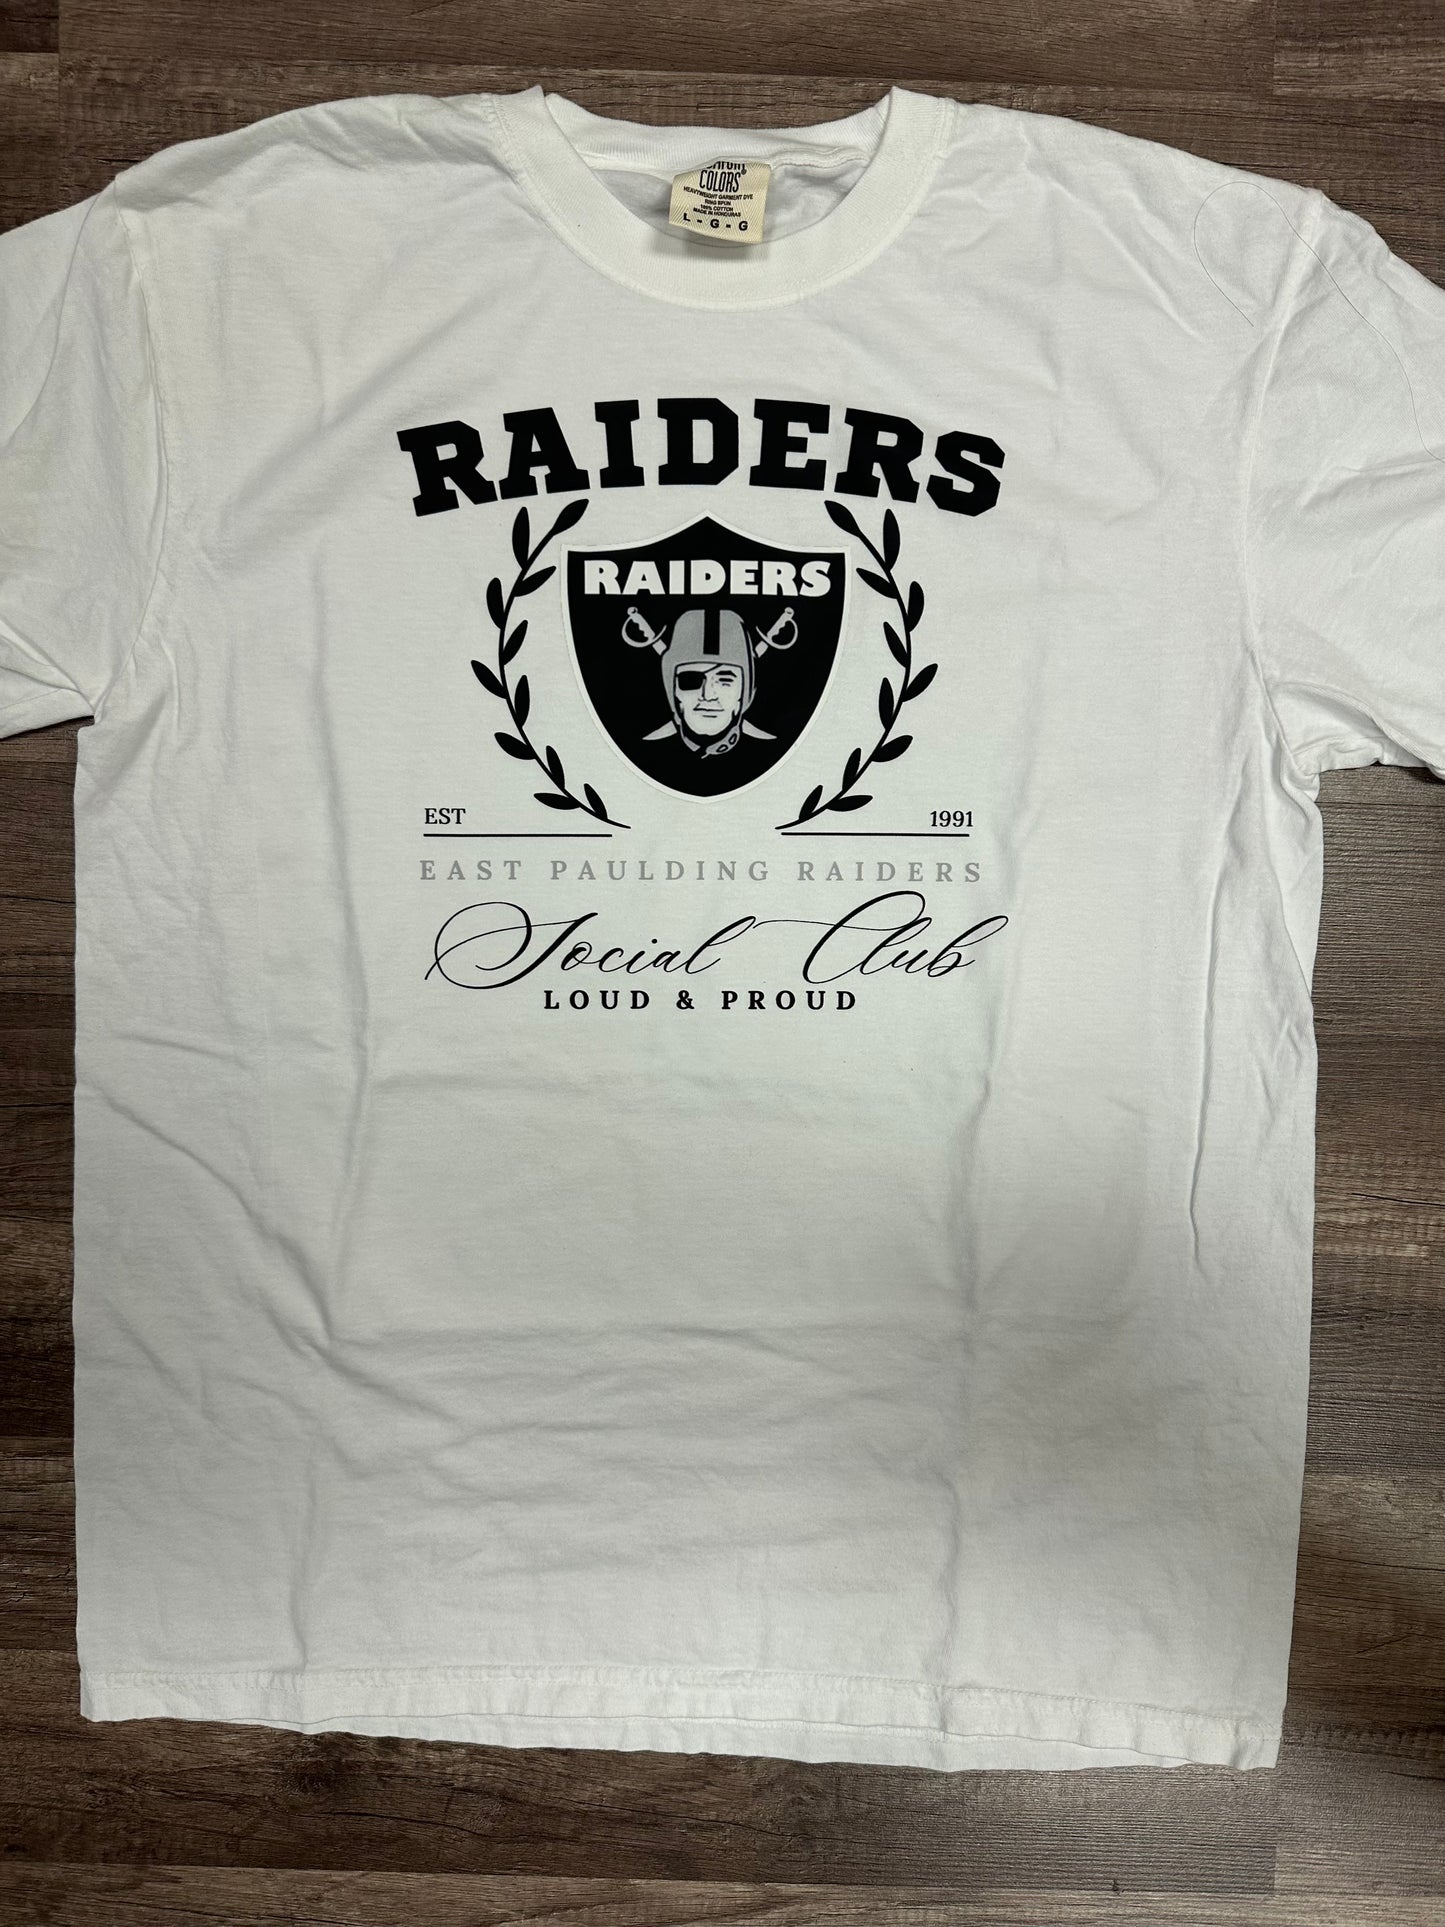 East Paulding Raiders social club cc tee